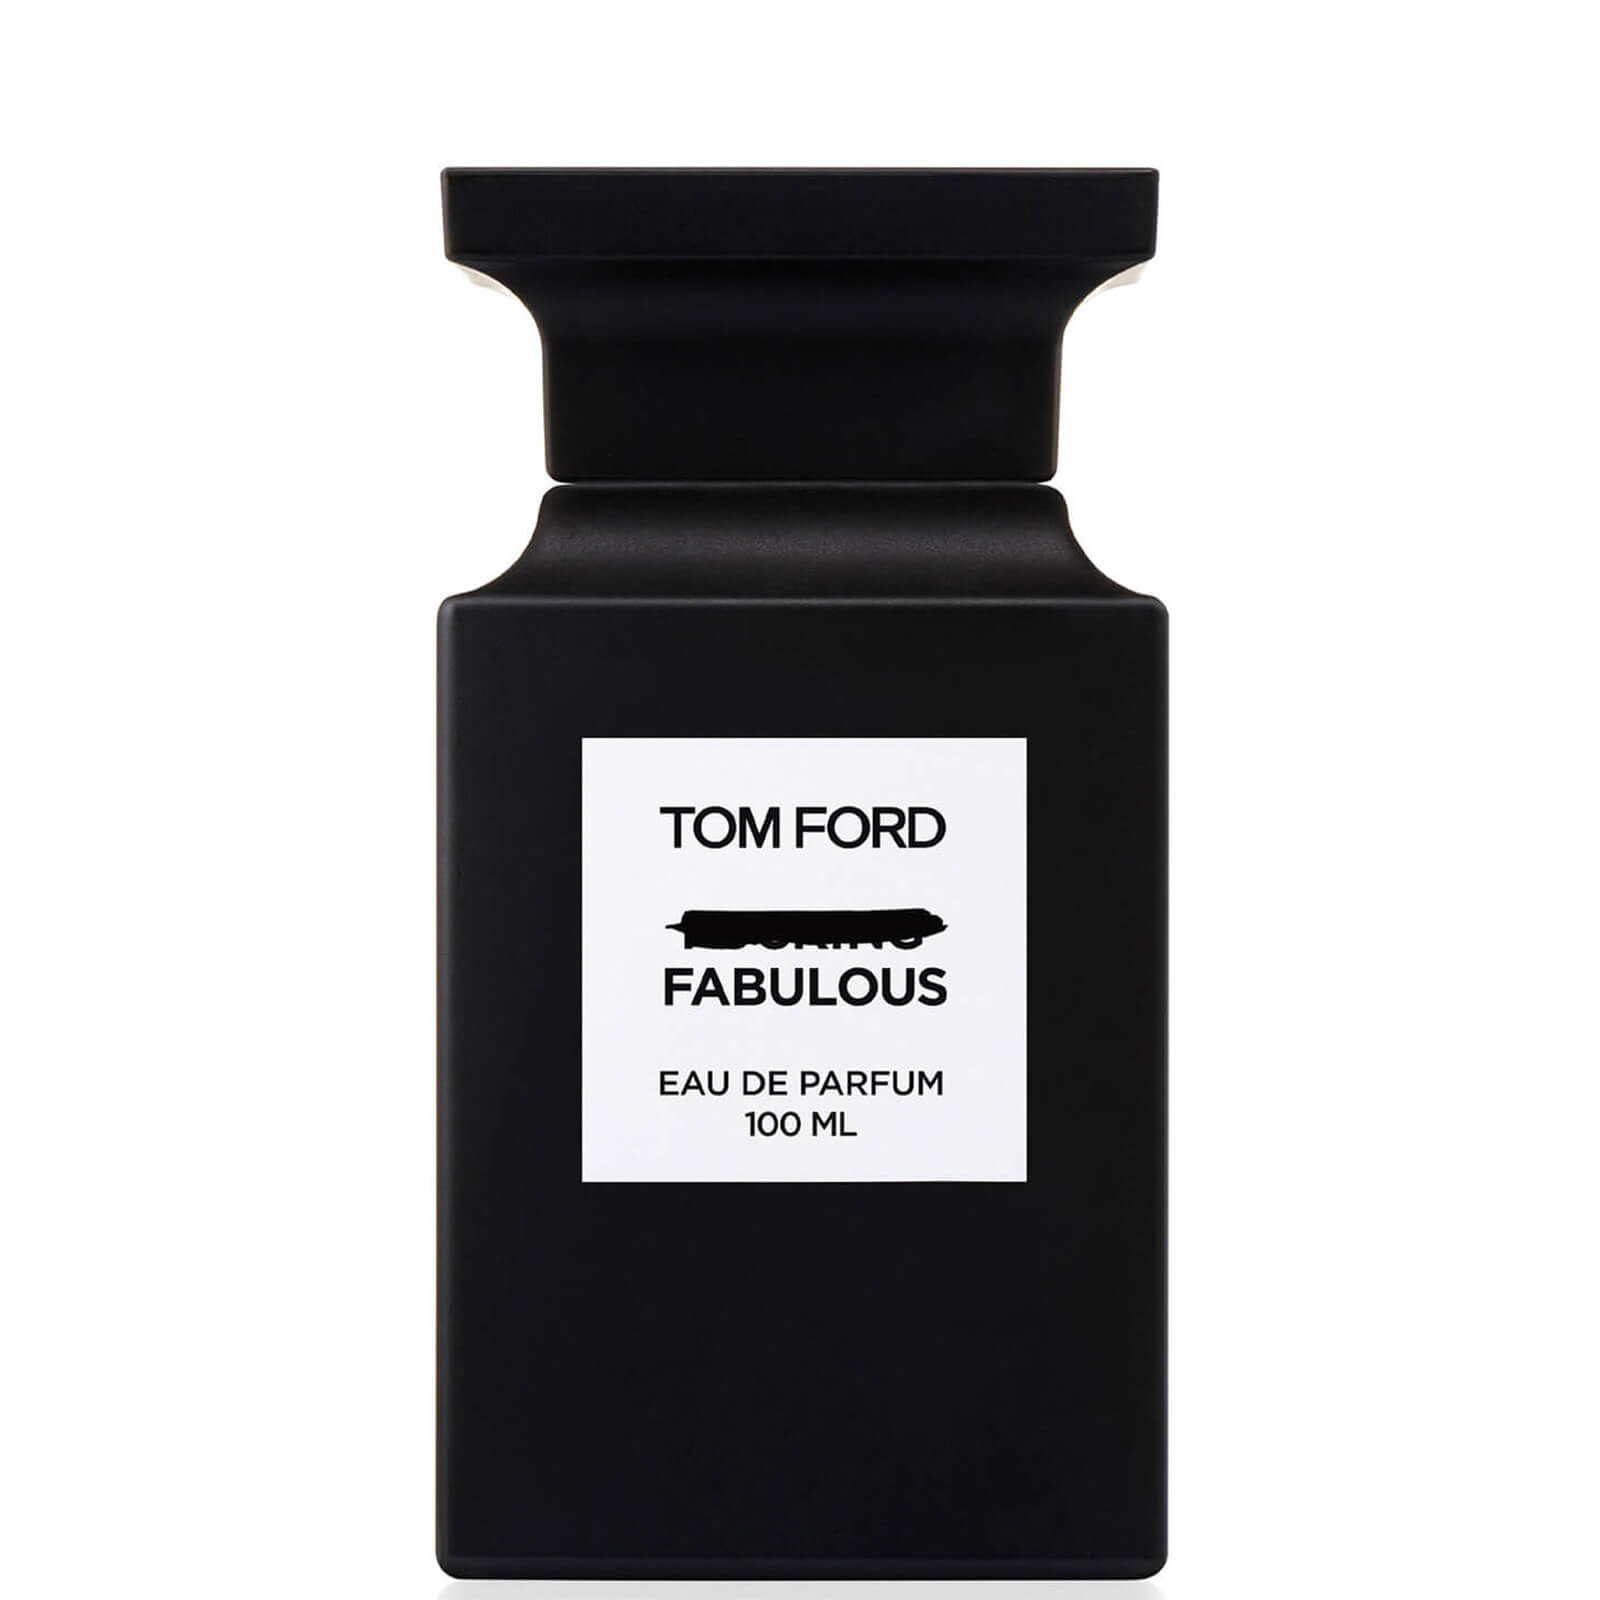 Photos - Women's Fragrance Tom Ford F***ing Fabulous Eau de Parfum Spray 100ml T7MK010000 